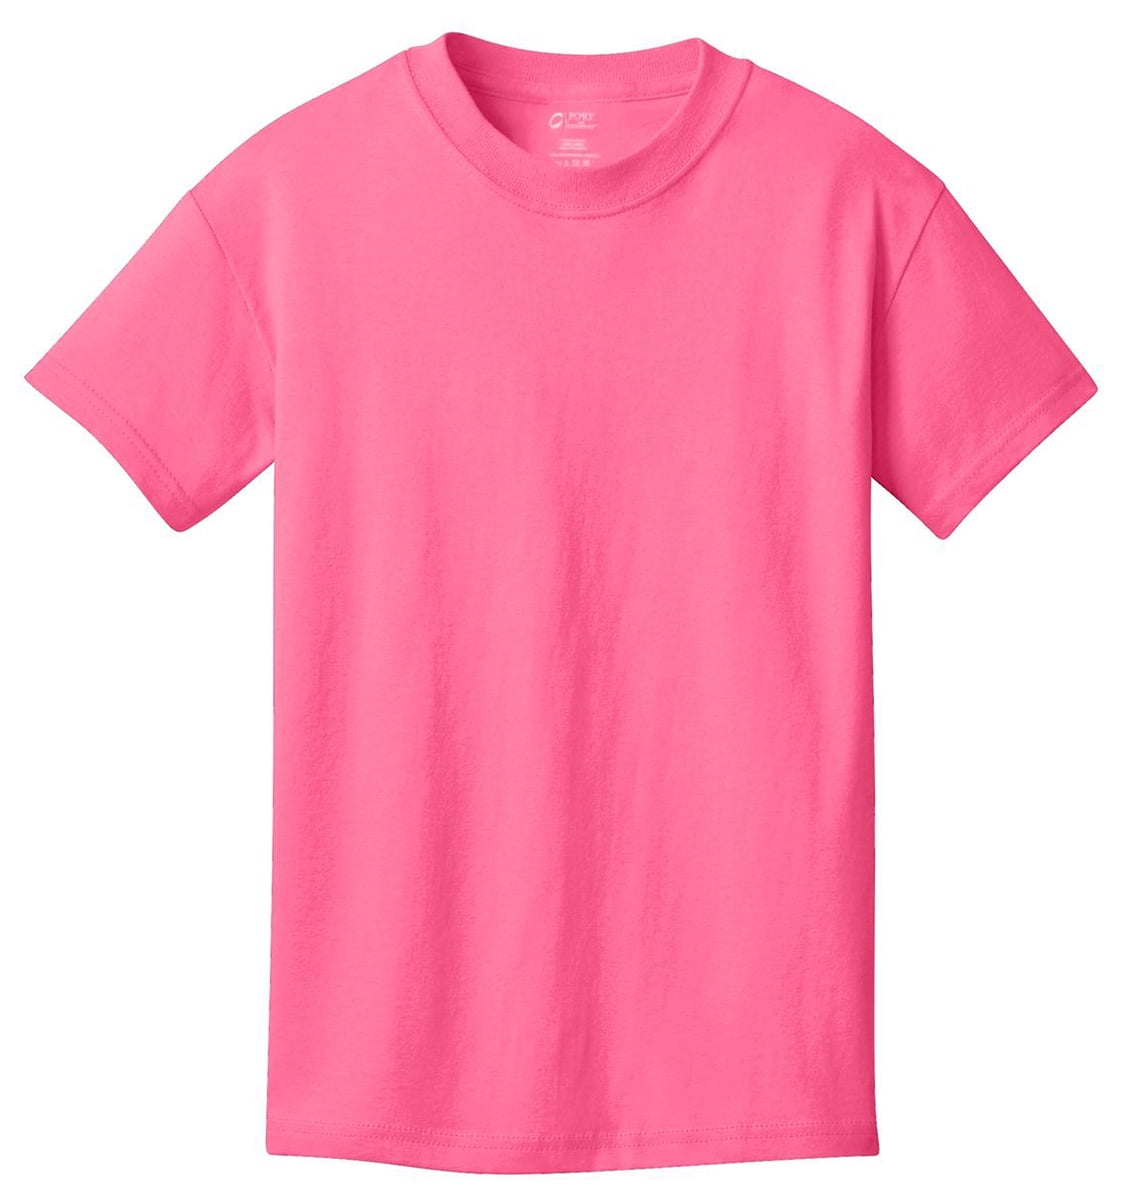 Port & Company Youth Classic Athletic Cotton T-Shirt - Walmart.com